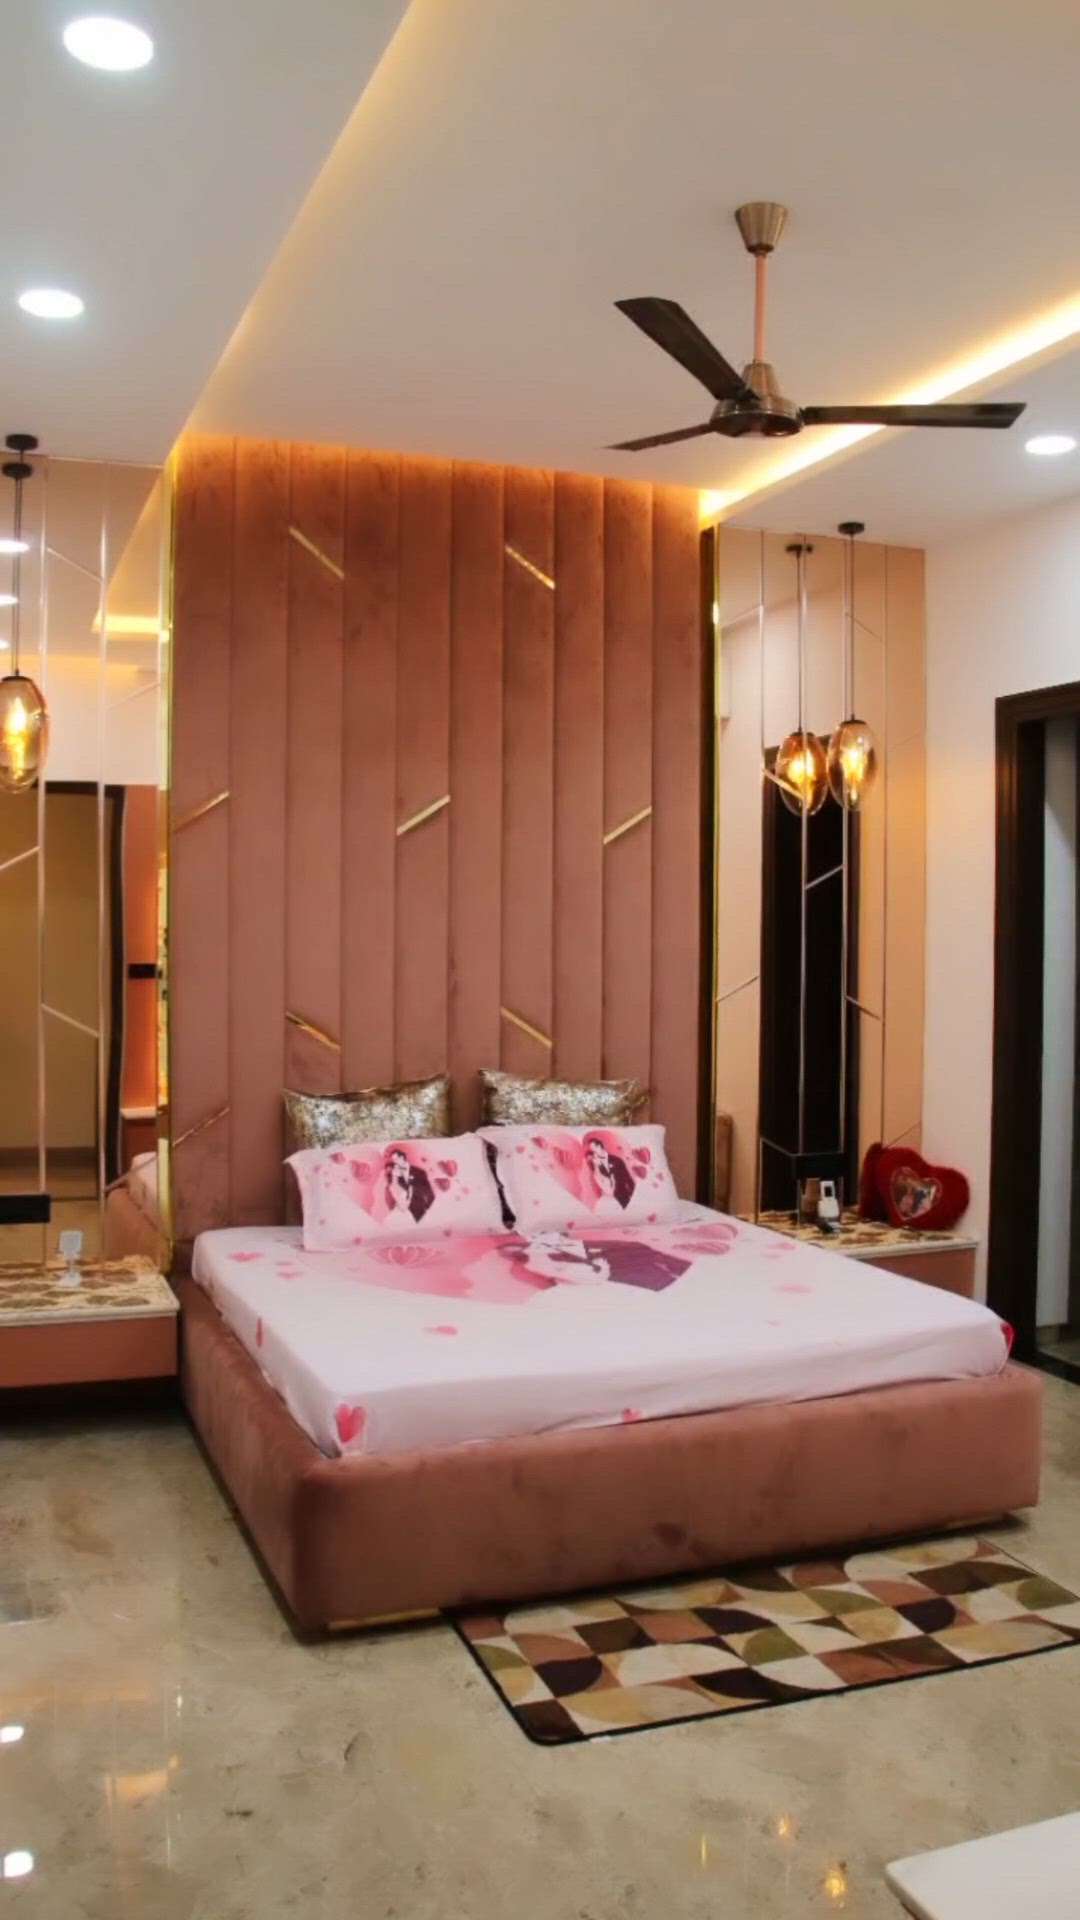 We Design your bedroom with your favourite color theme!!!
 #BedroomDecor  #MasterBedroom  #BedroomDesigns  #bedroominteriors  #colordeccor  #GlassMirror  #mirrorwall  #italianmarbles